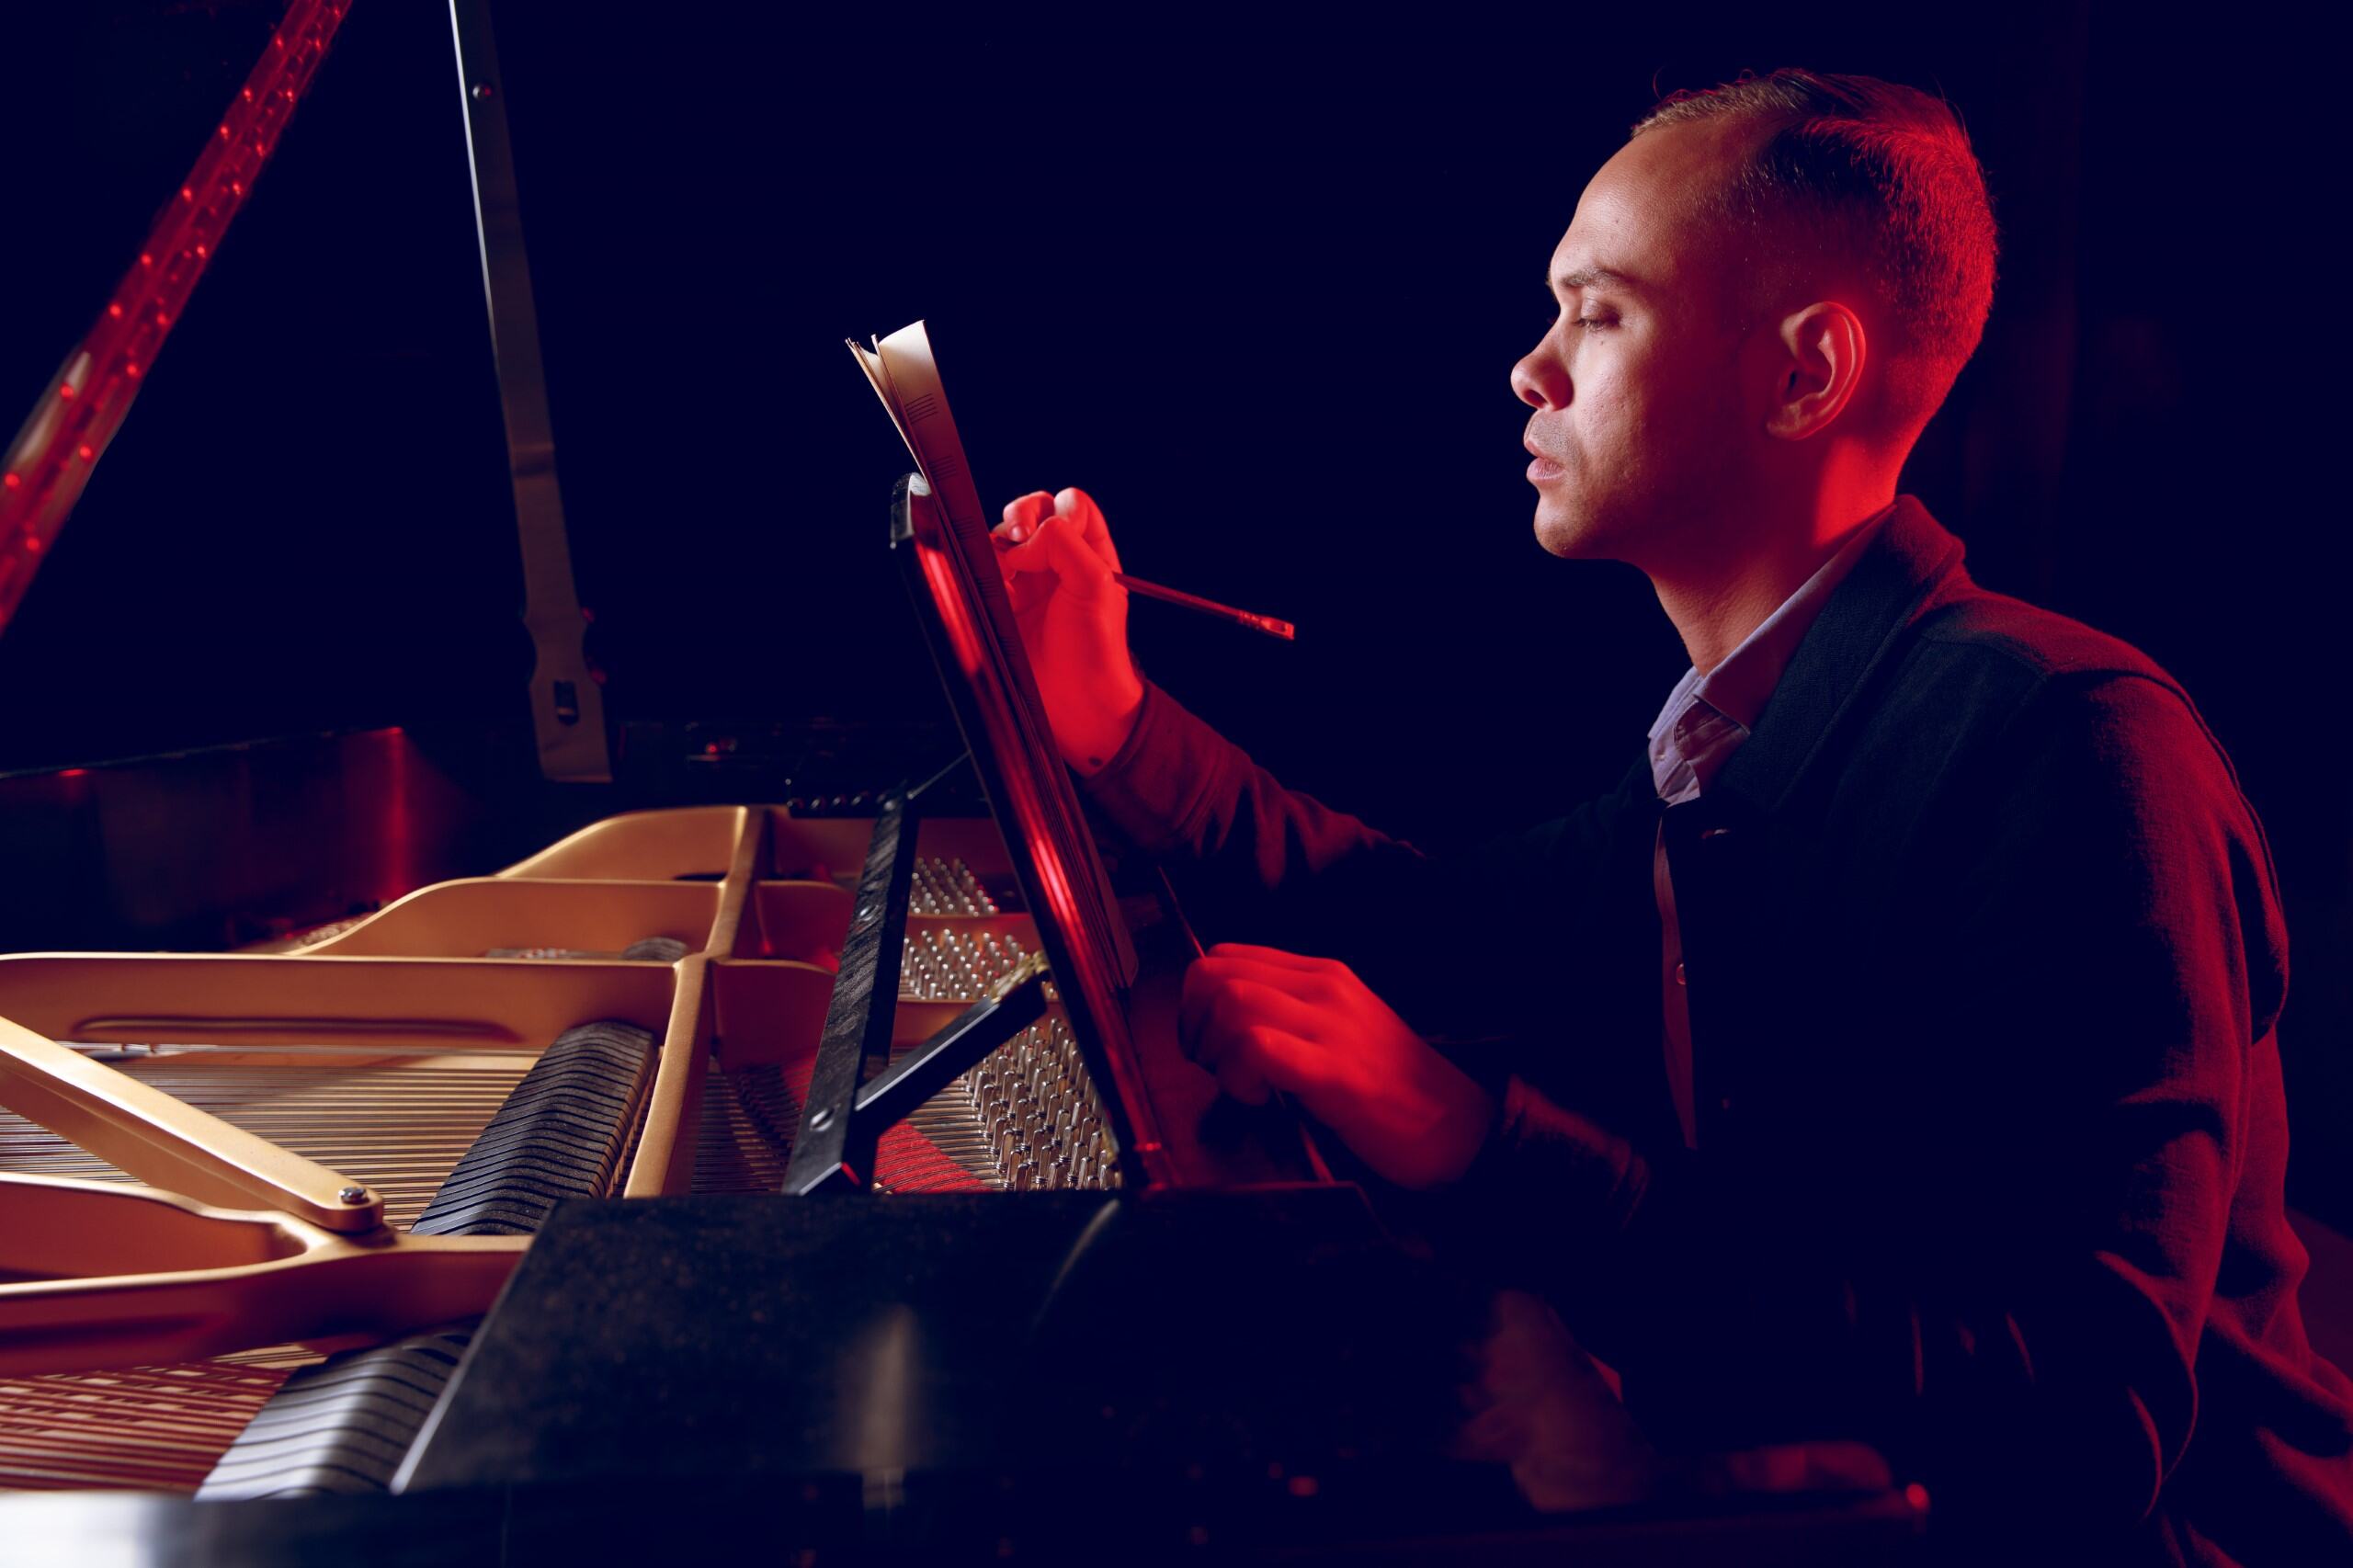 Jeremy Smith writes music at a piano